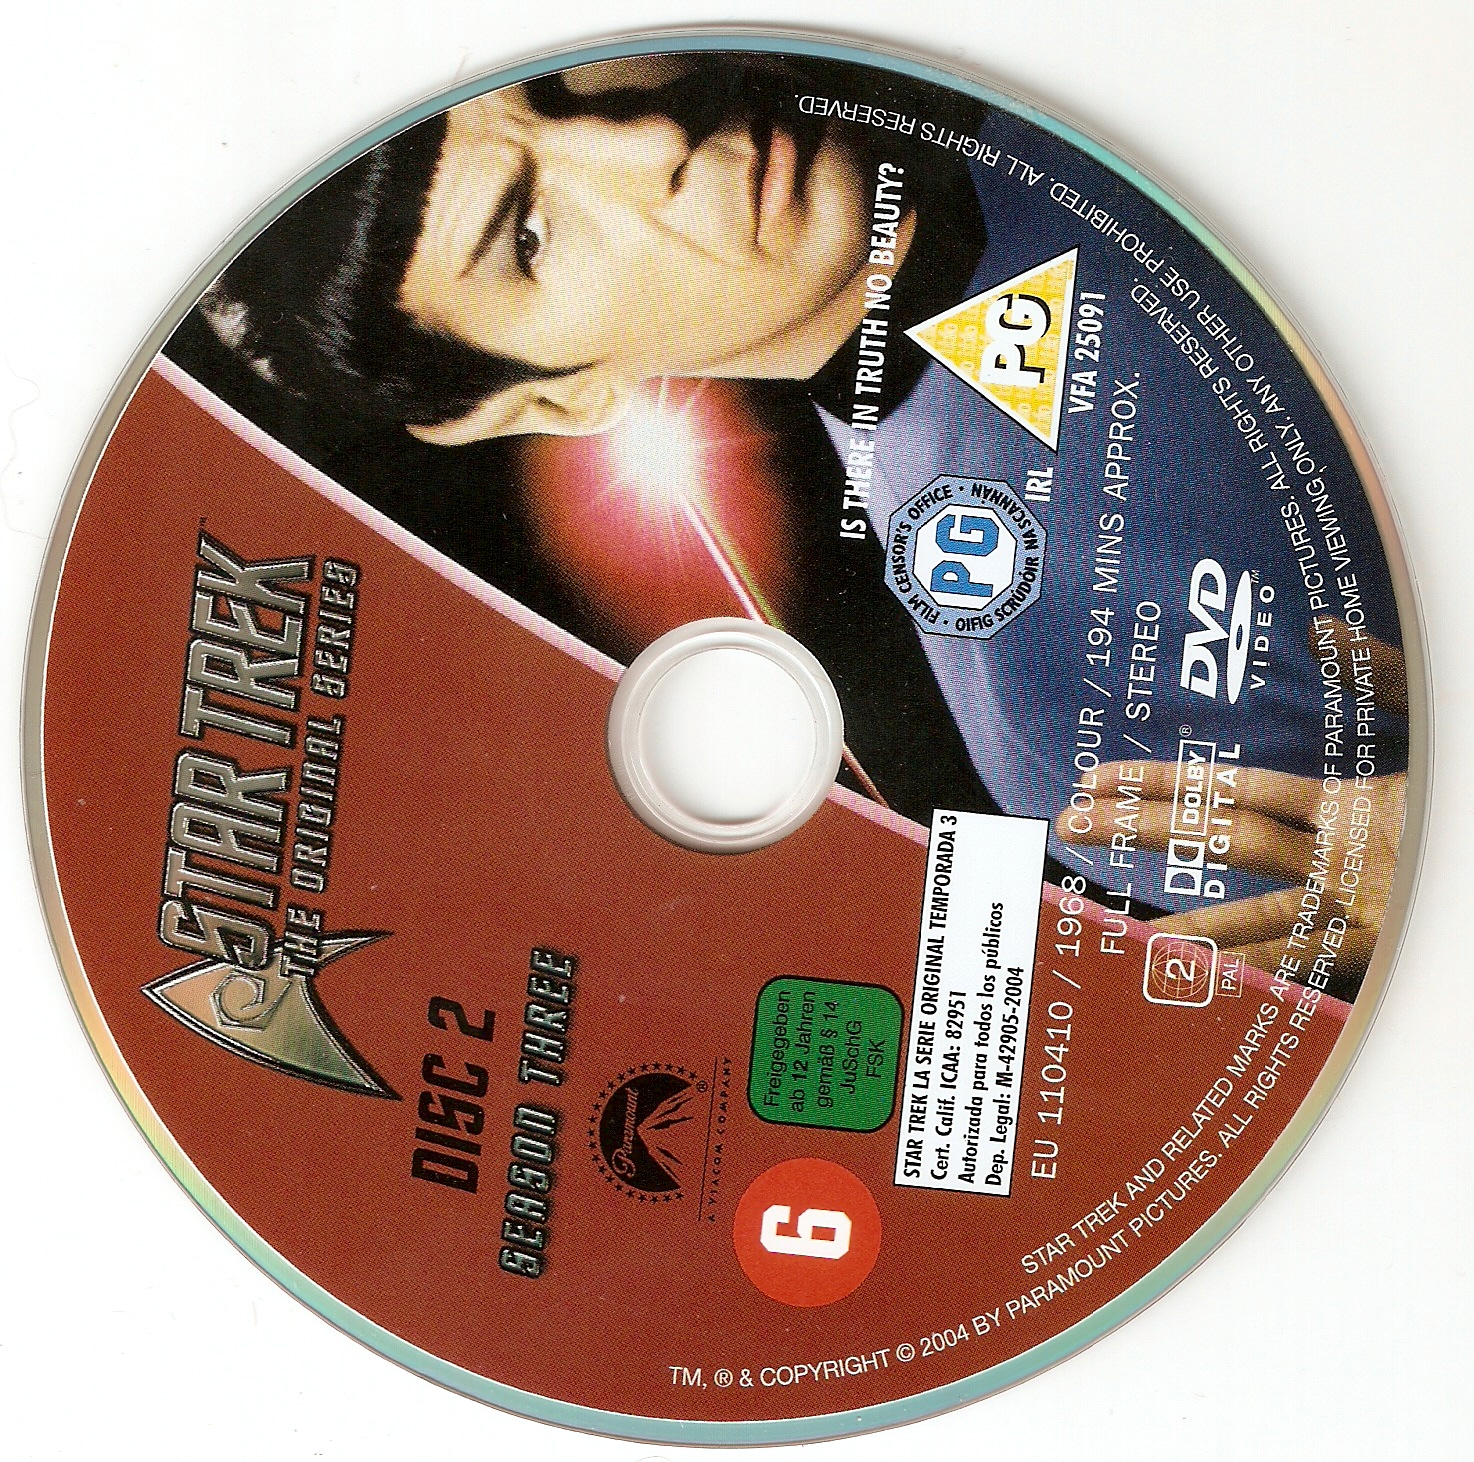 Star trek saison 3 DVD 2